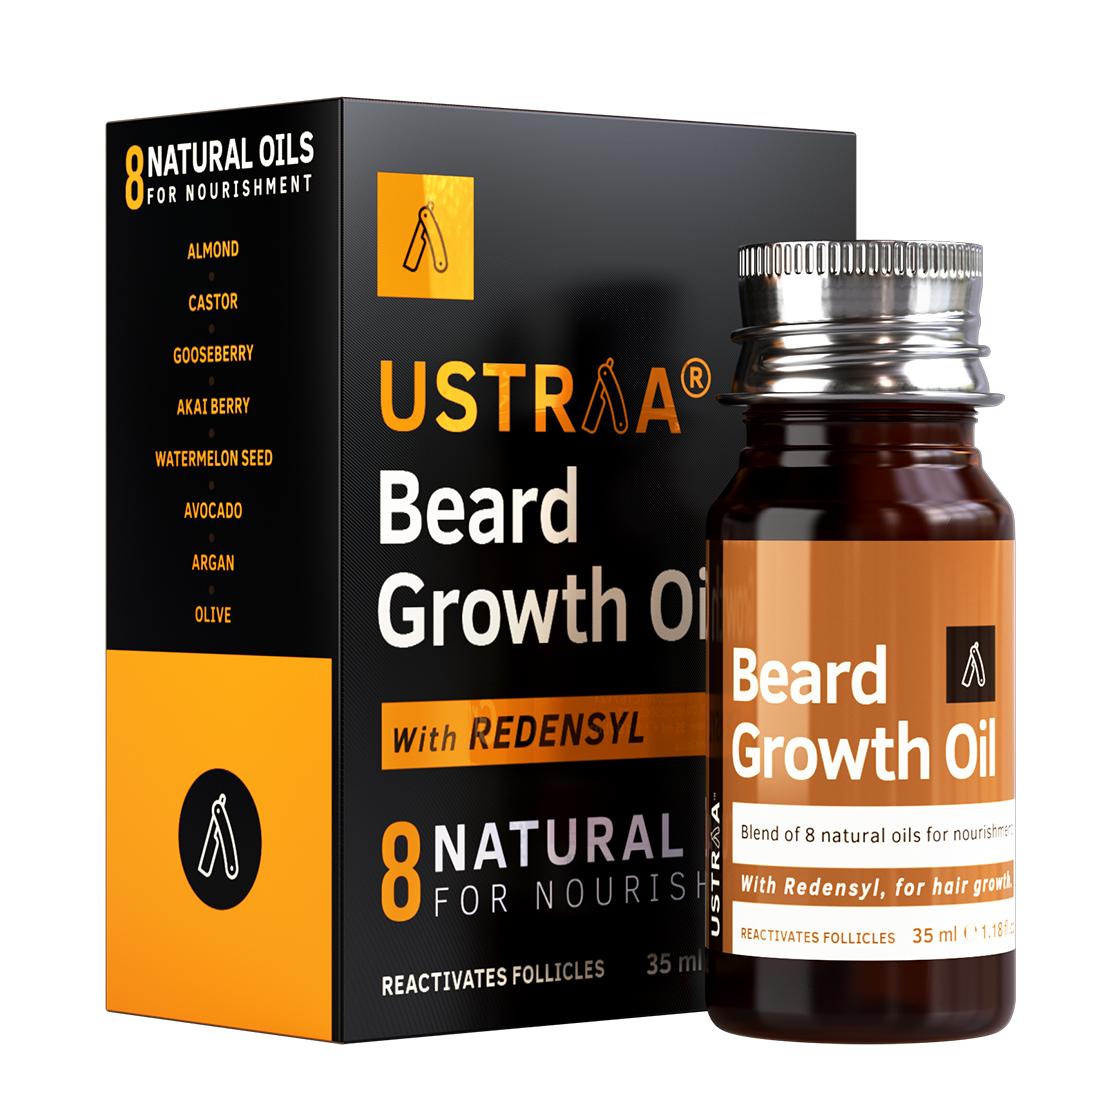 Ustraa Beard Growth Oil, Beard Oil for more Beard Growth with Redensyl, 8 Natural Oils including Jojoba Oil & Vitamin E, 35ml